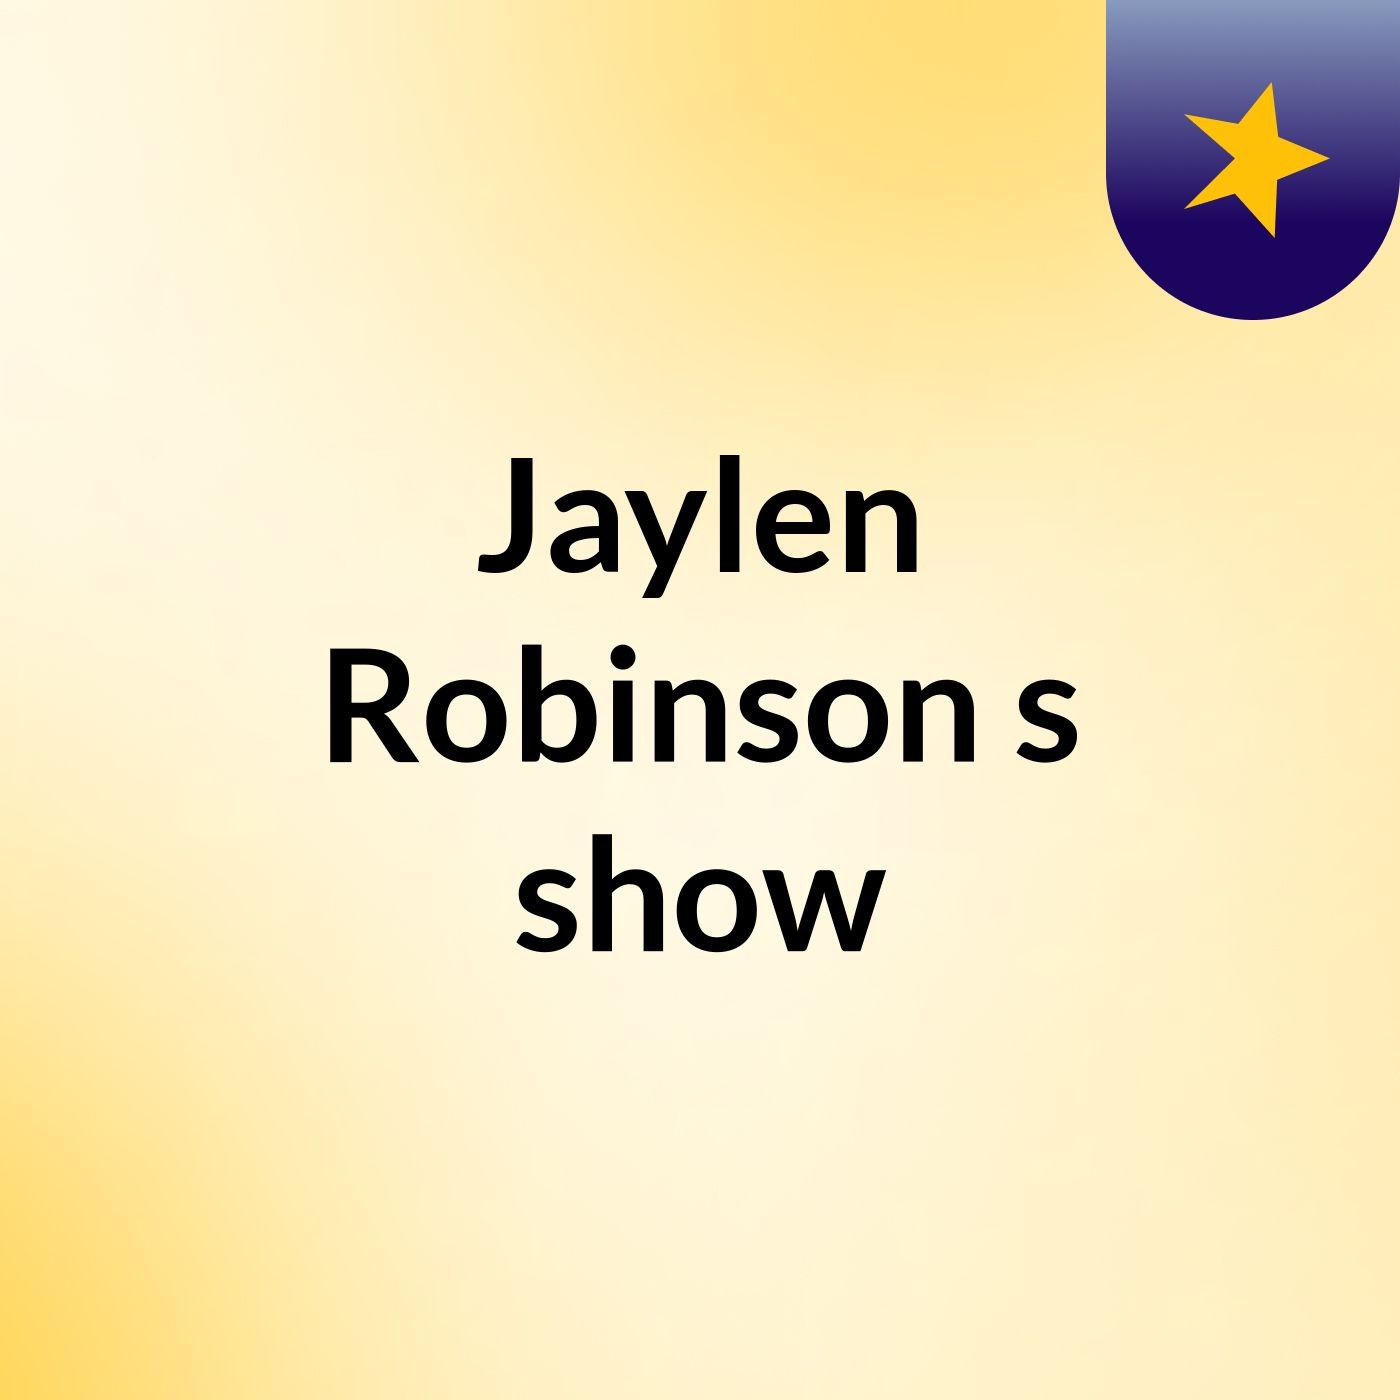 Episode 2 - Jaylen Robinson's show